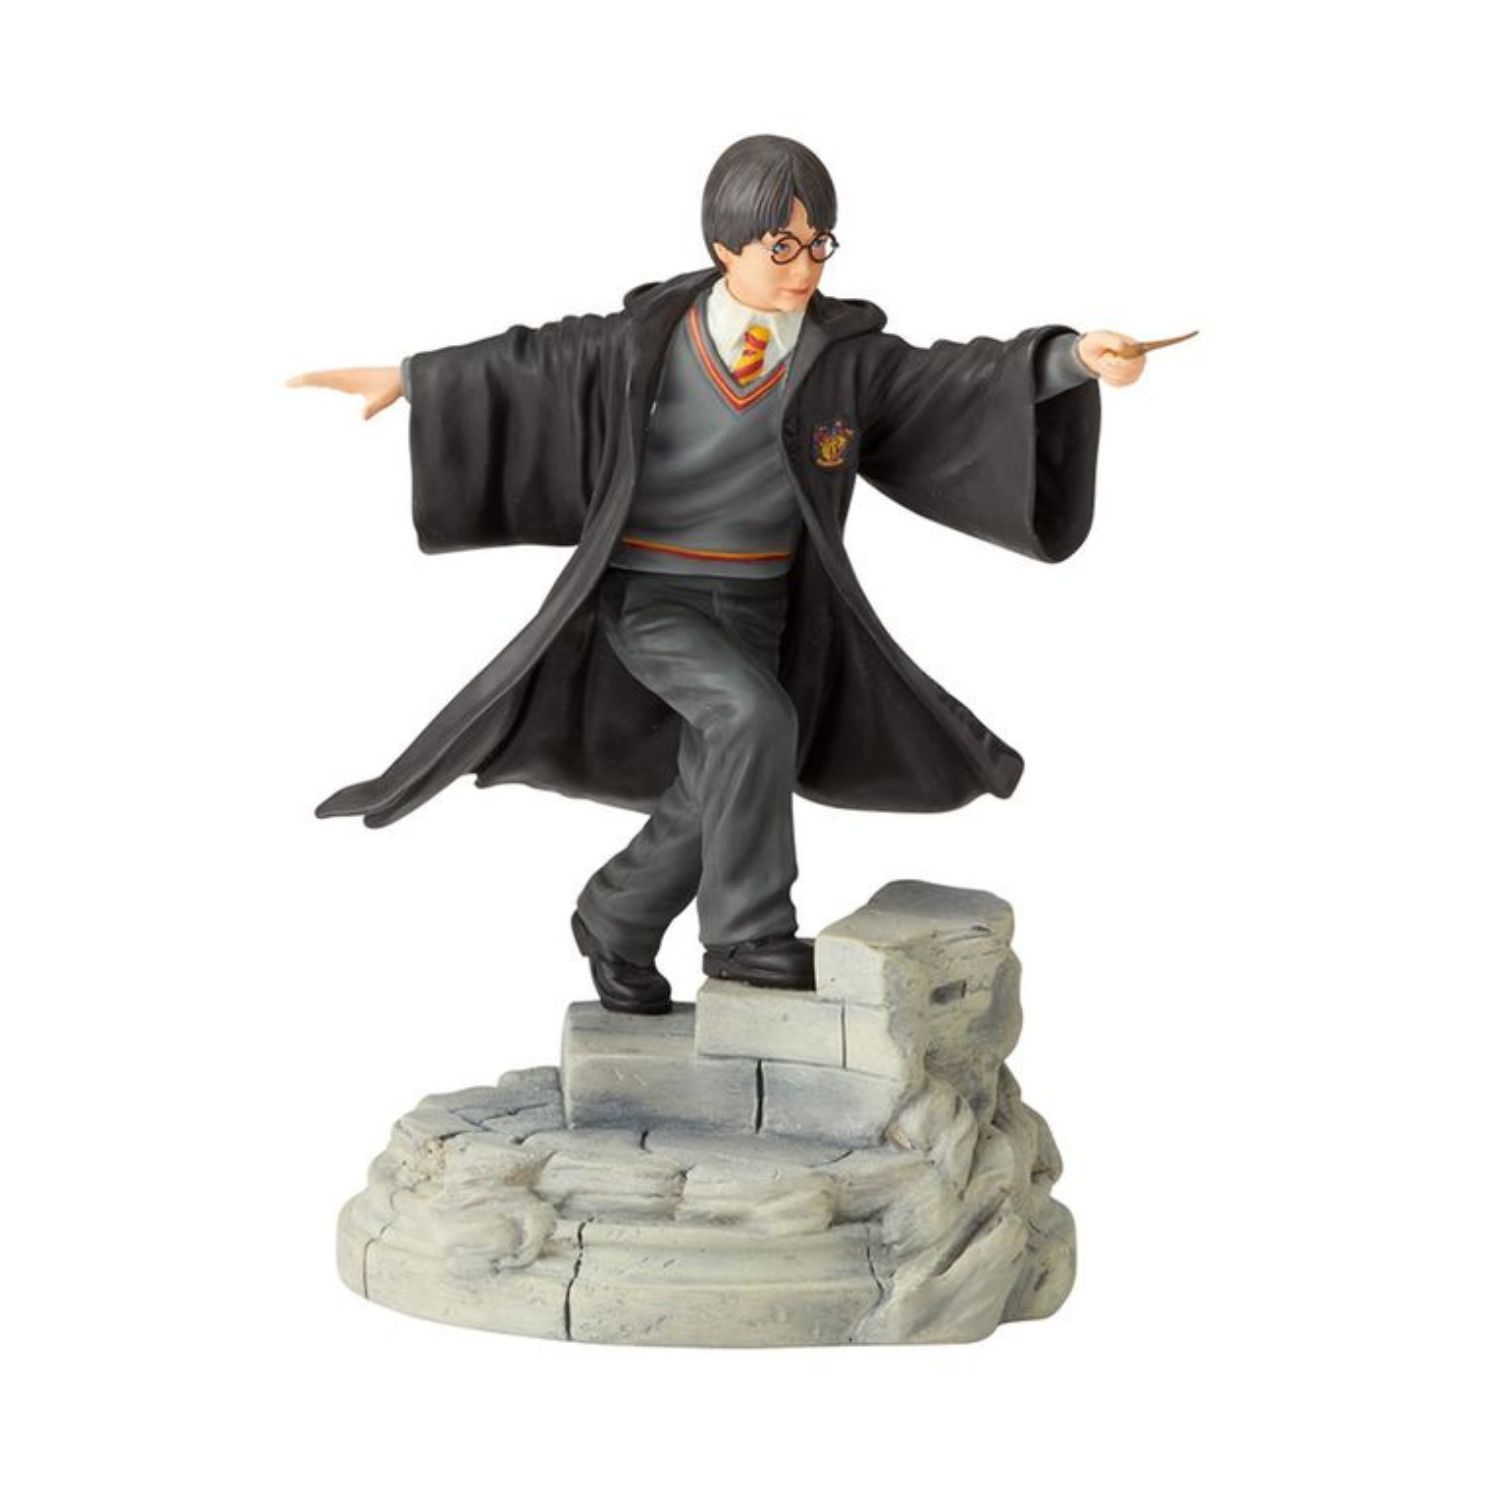 Enesco Wizarding World of Harry Potter Tom Riddle Figurine, 9